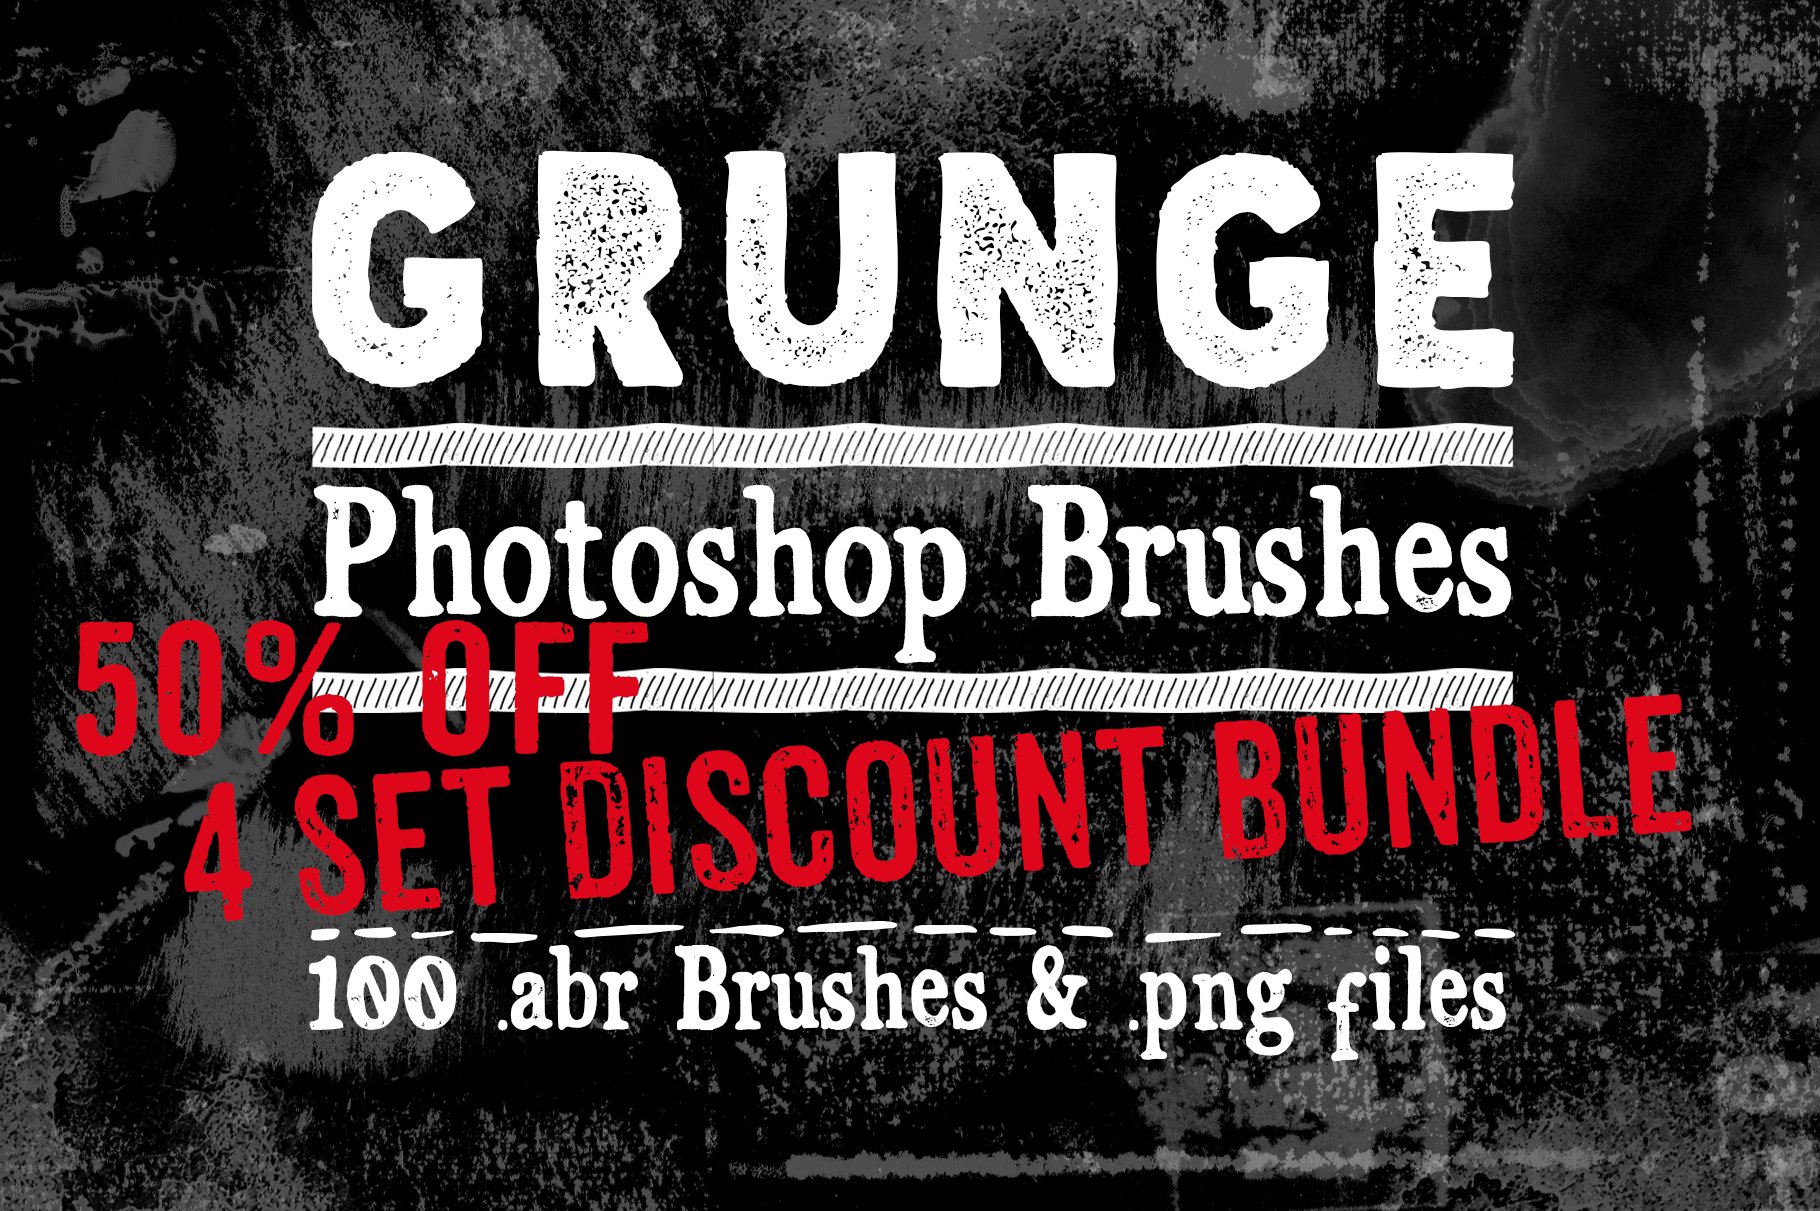 Grunge Texture Photoshop Brushes 50%cover image.